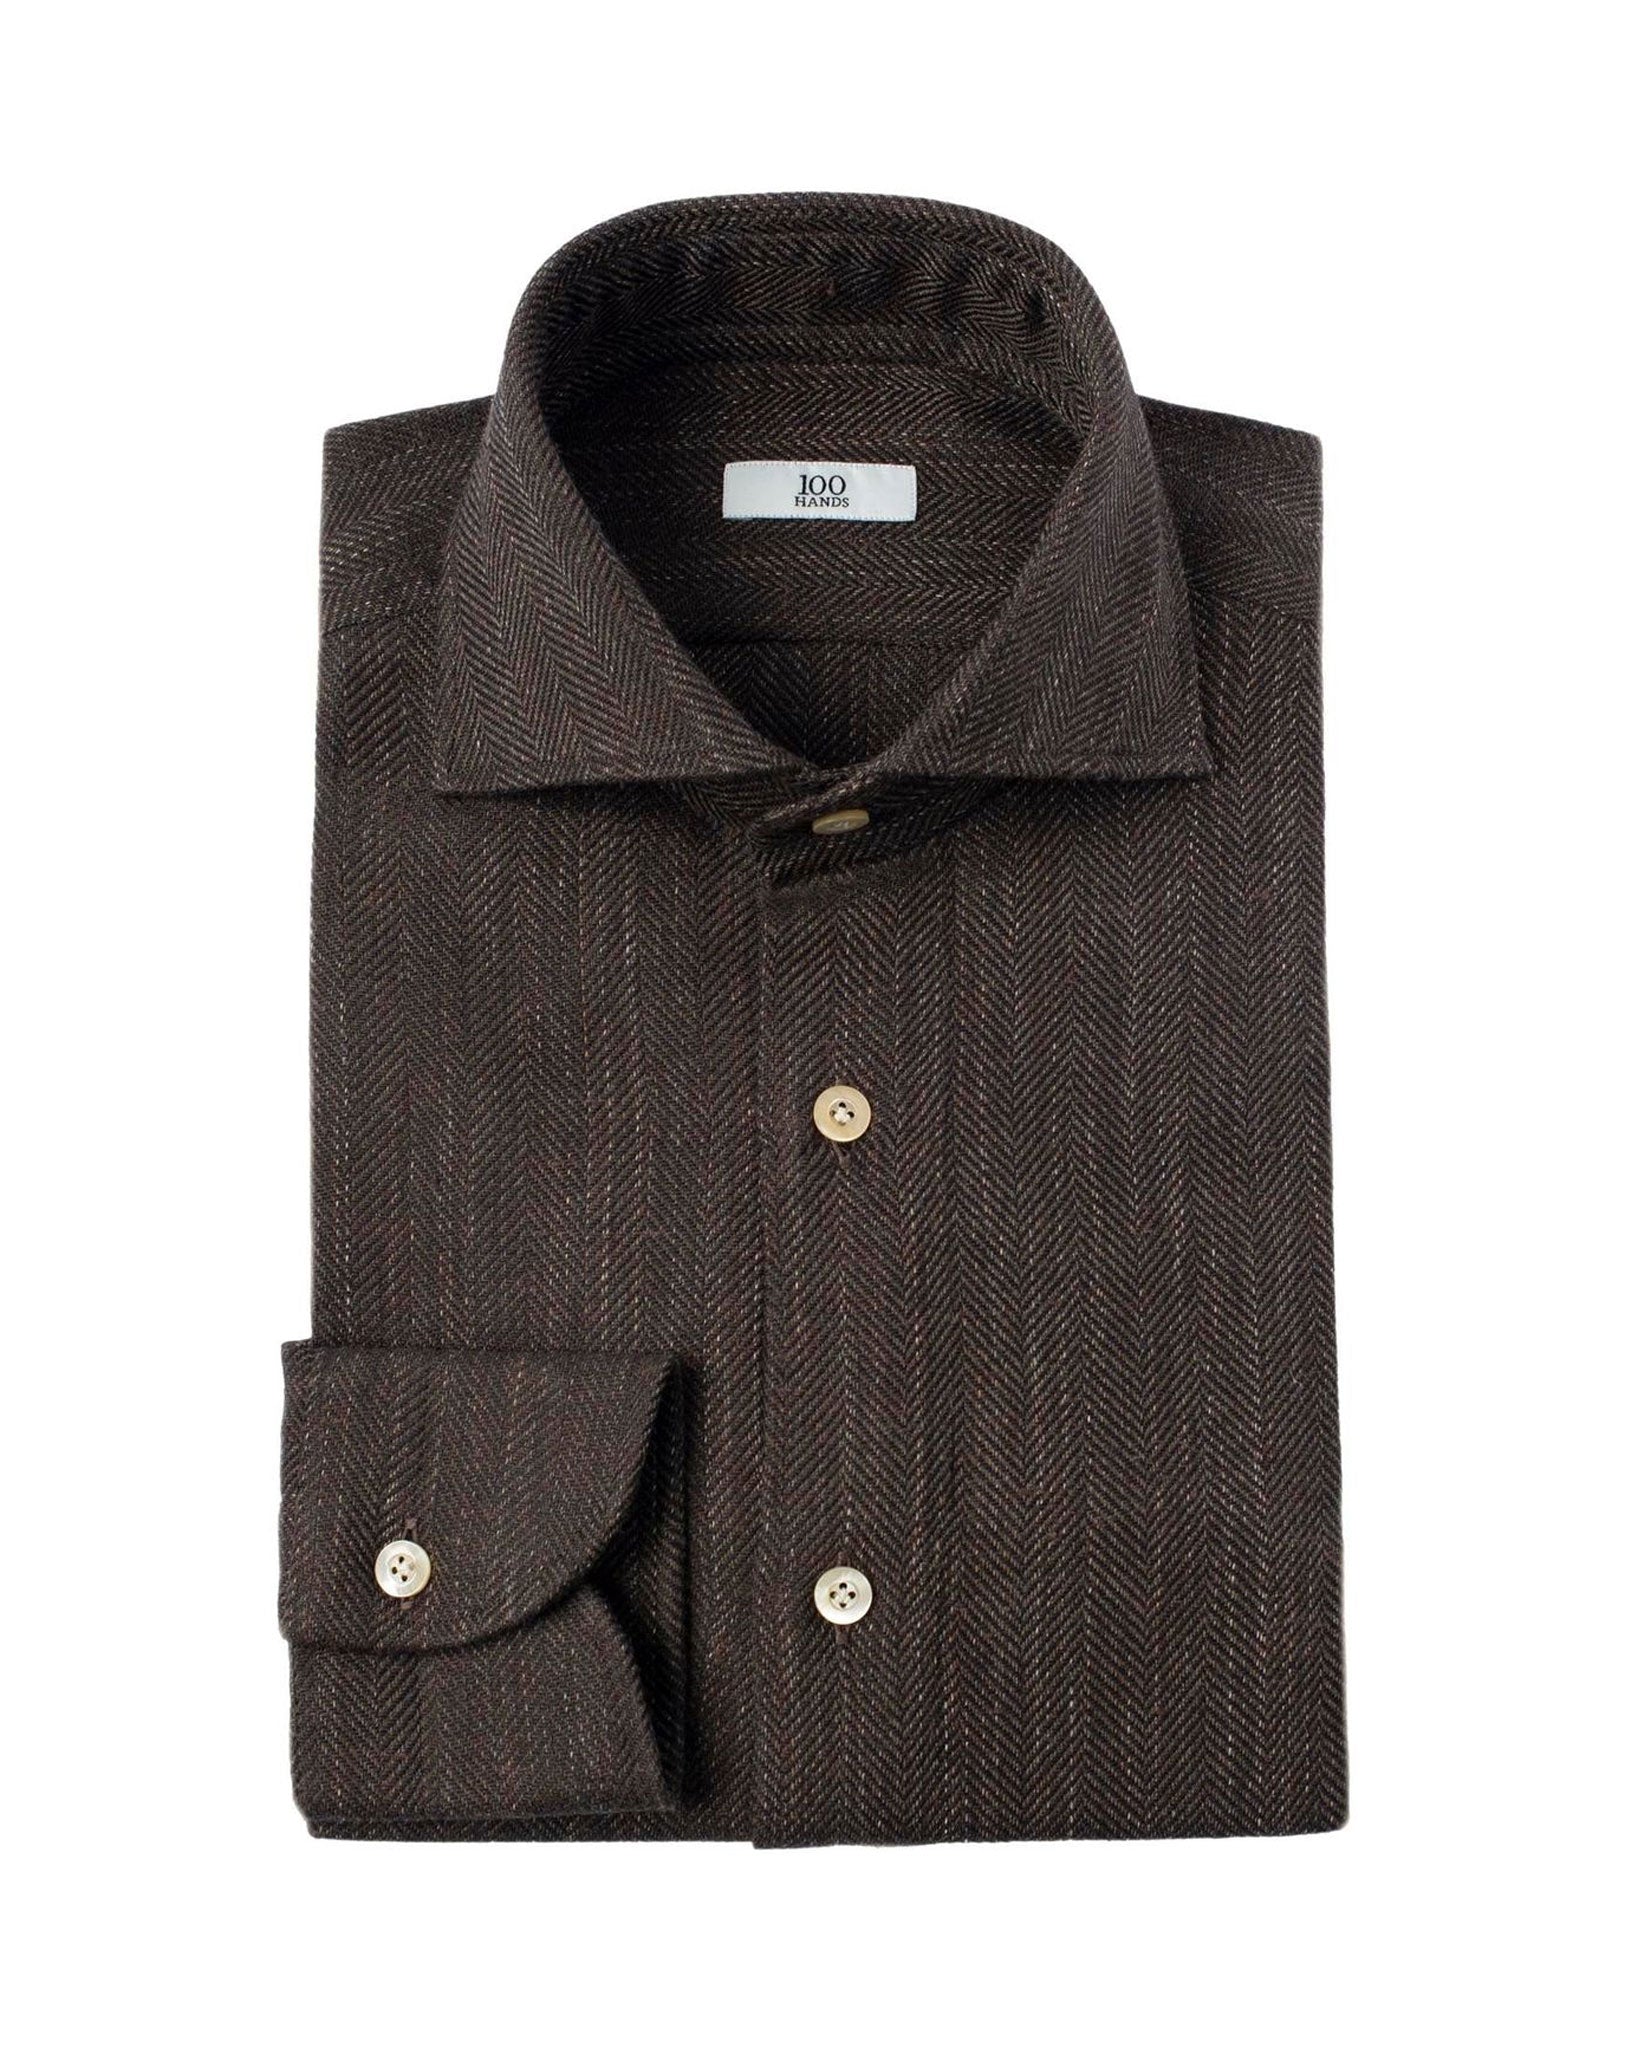 Brown herringbone shirt, mens formal shirts Dubai.